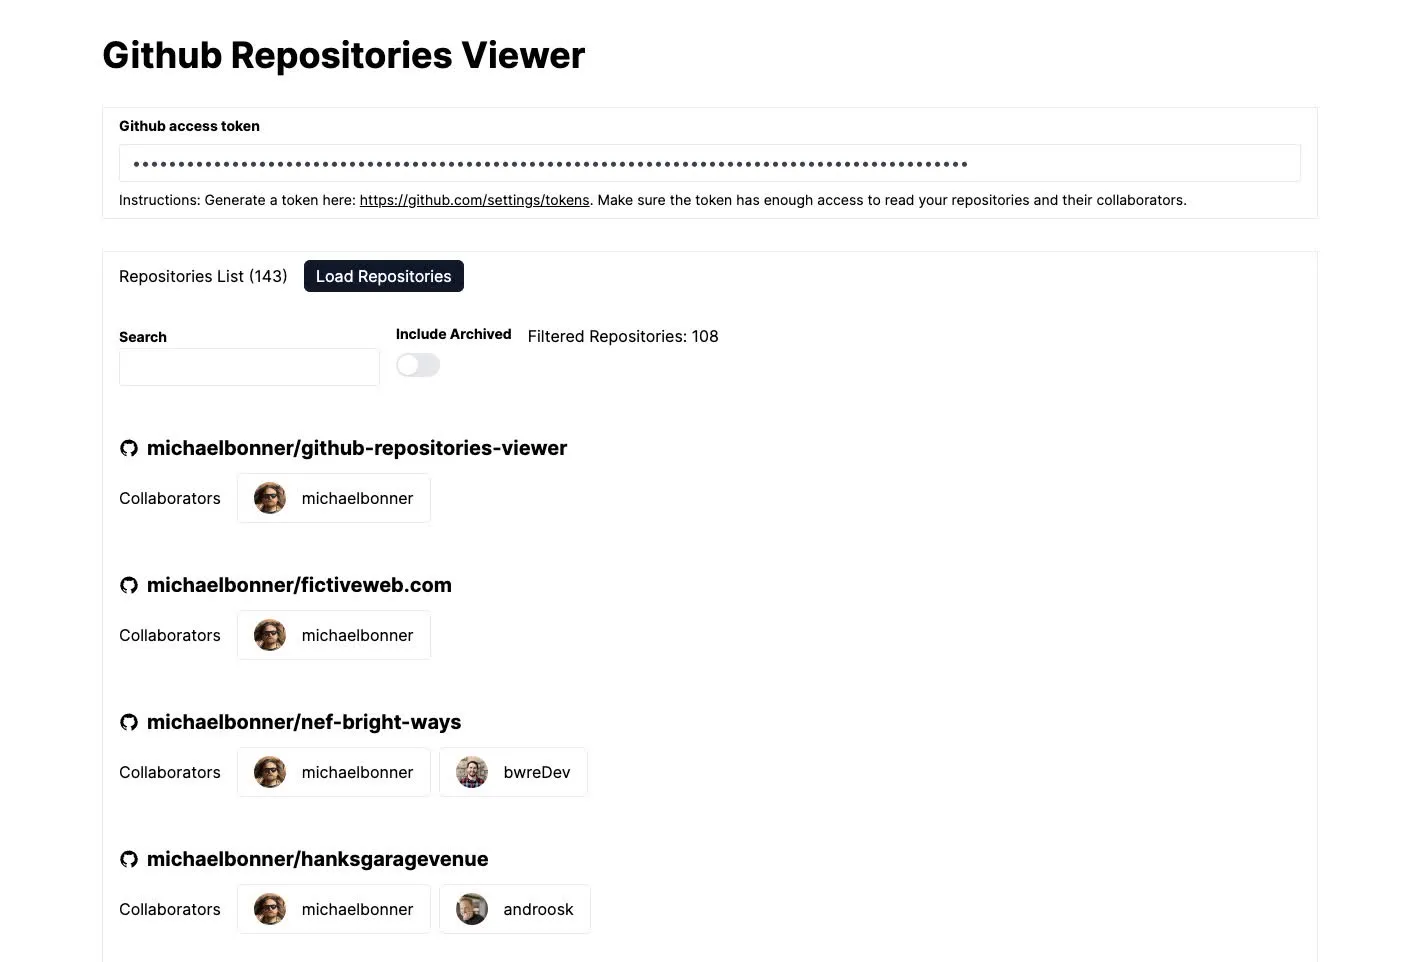 Screenshot of the GitHub Repositories Viewer app